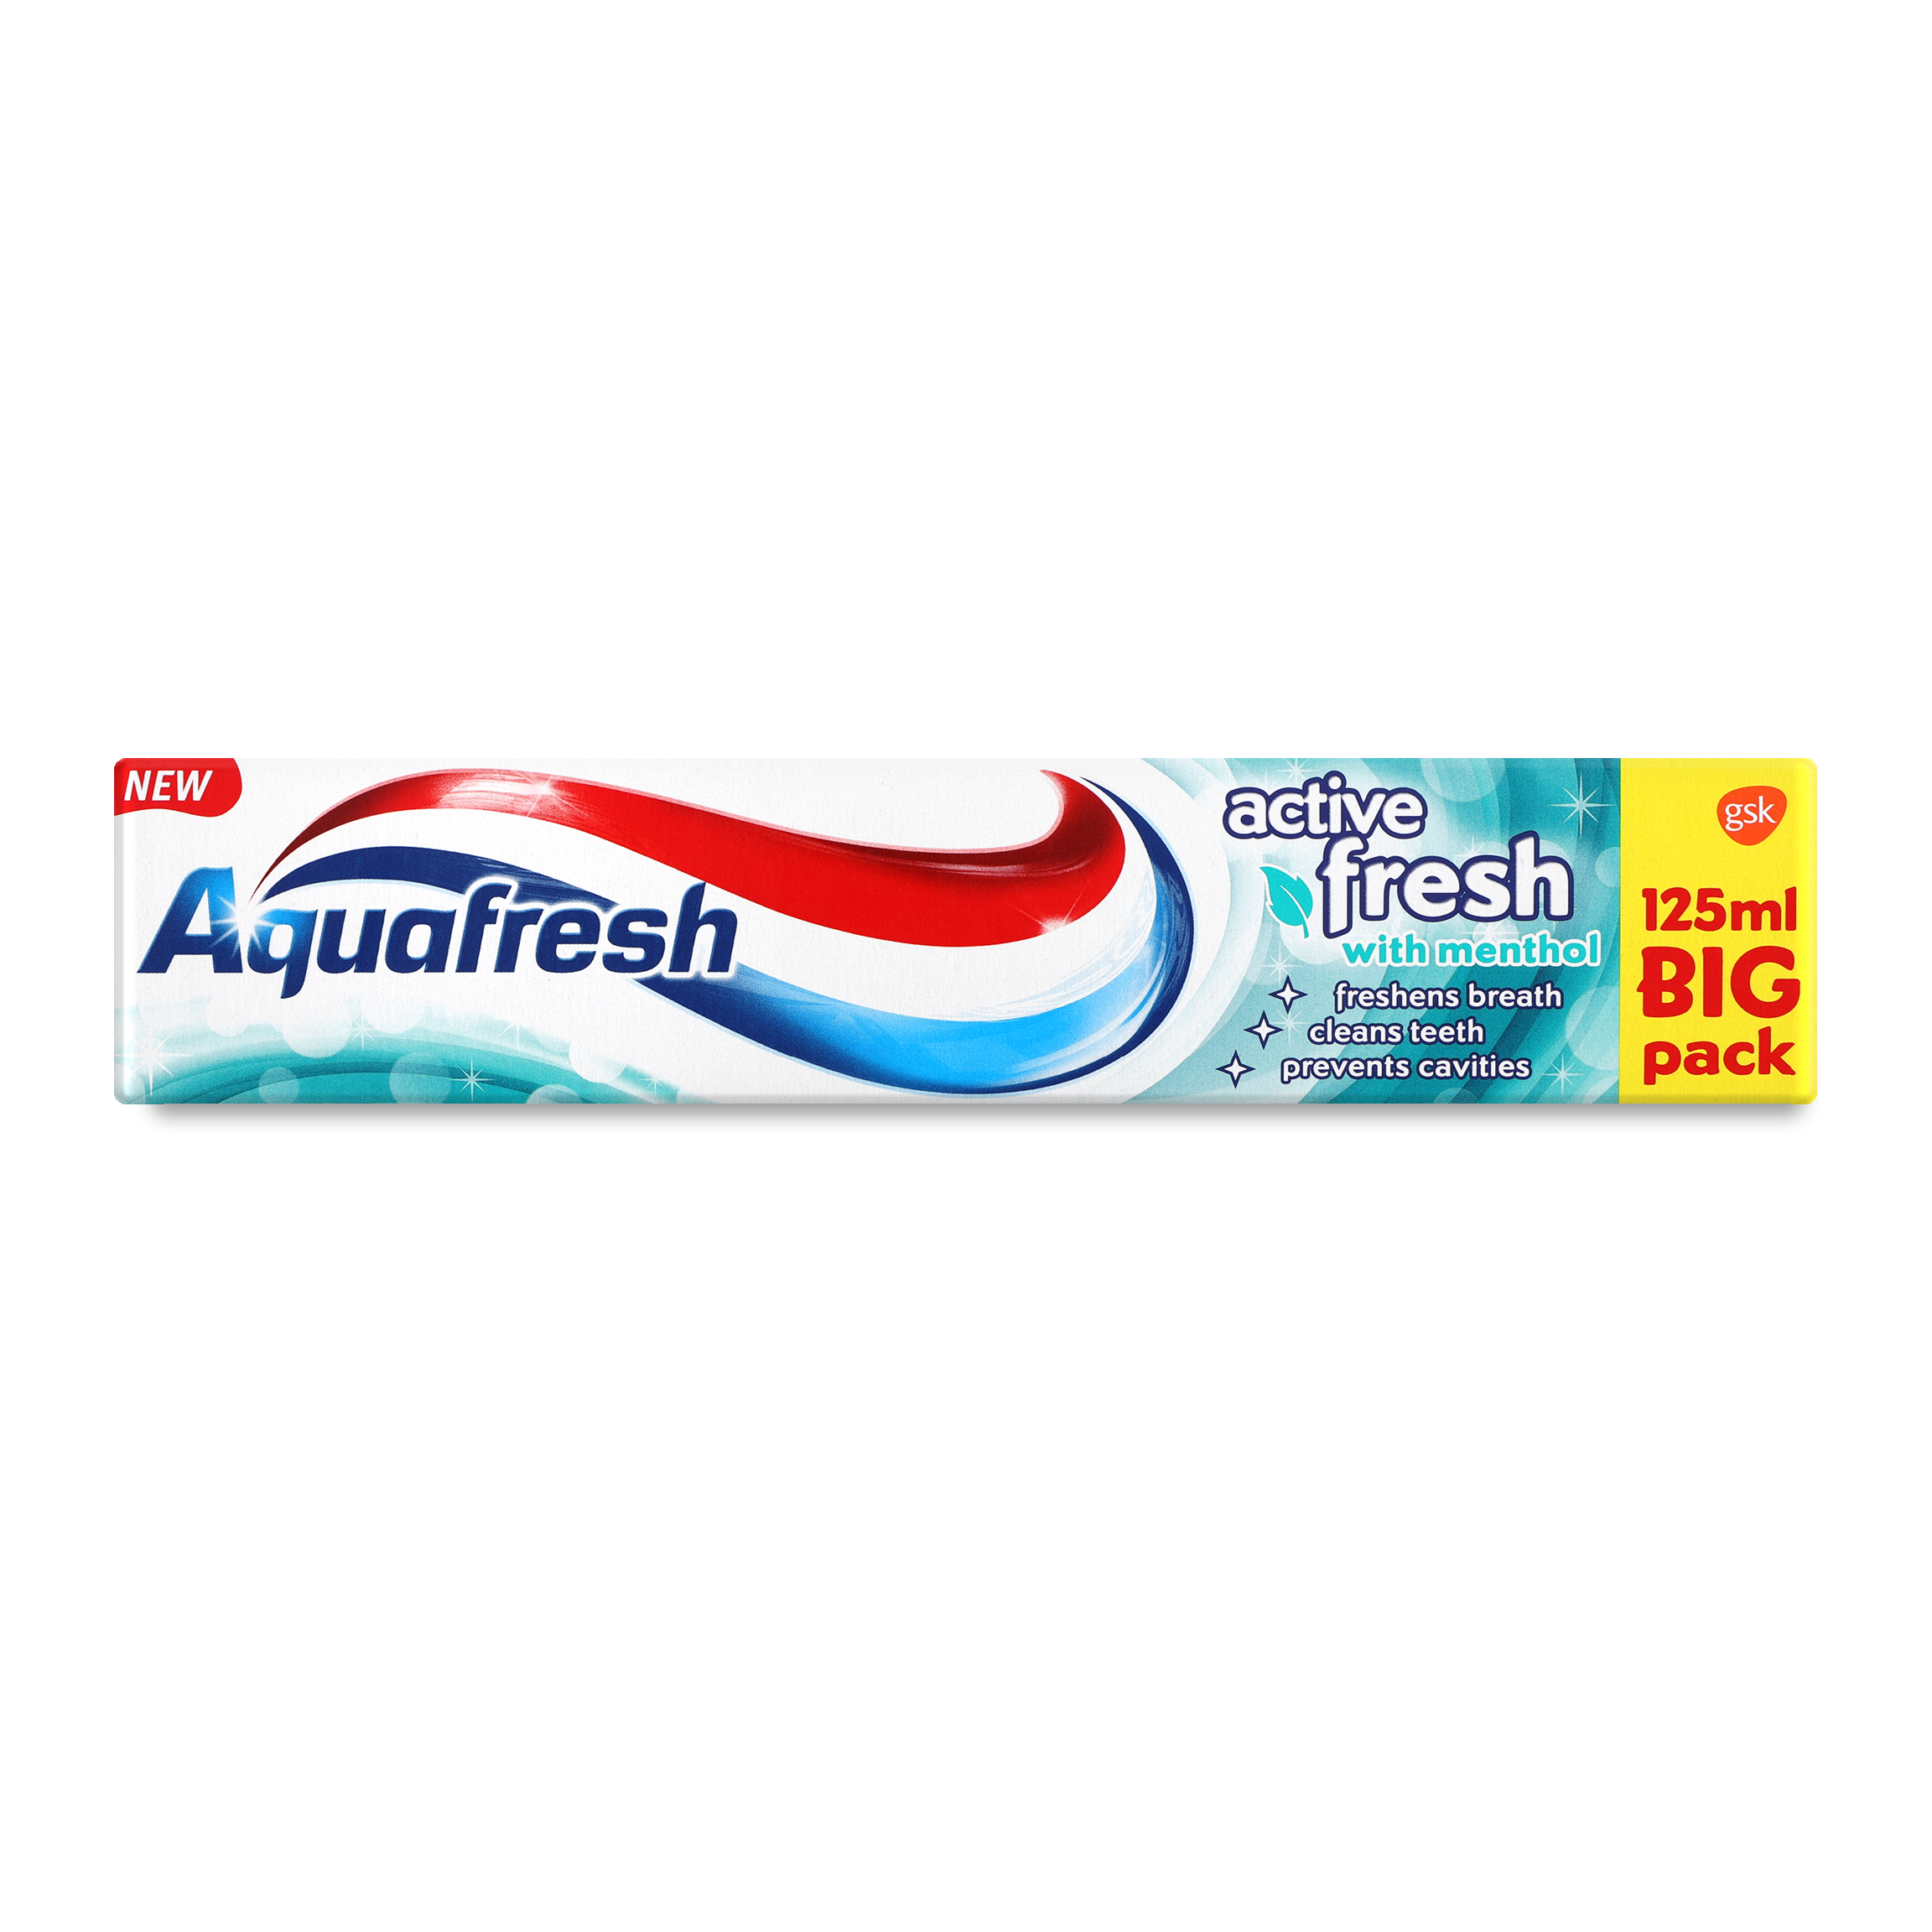 Aquafresh Toothpaste Activ Fresh with Mentol 125ml